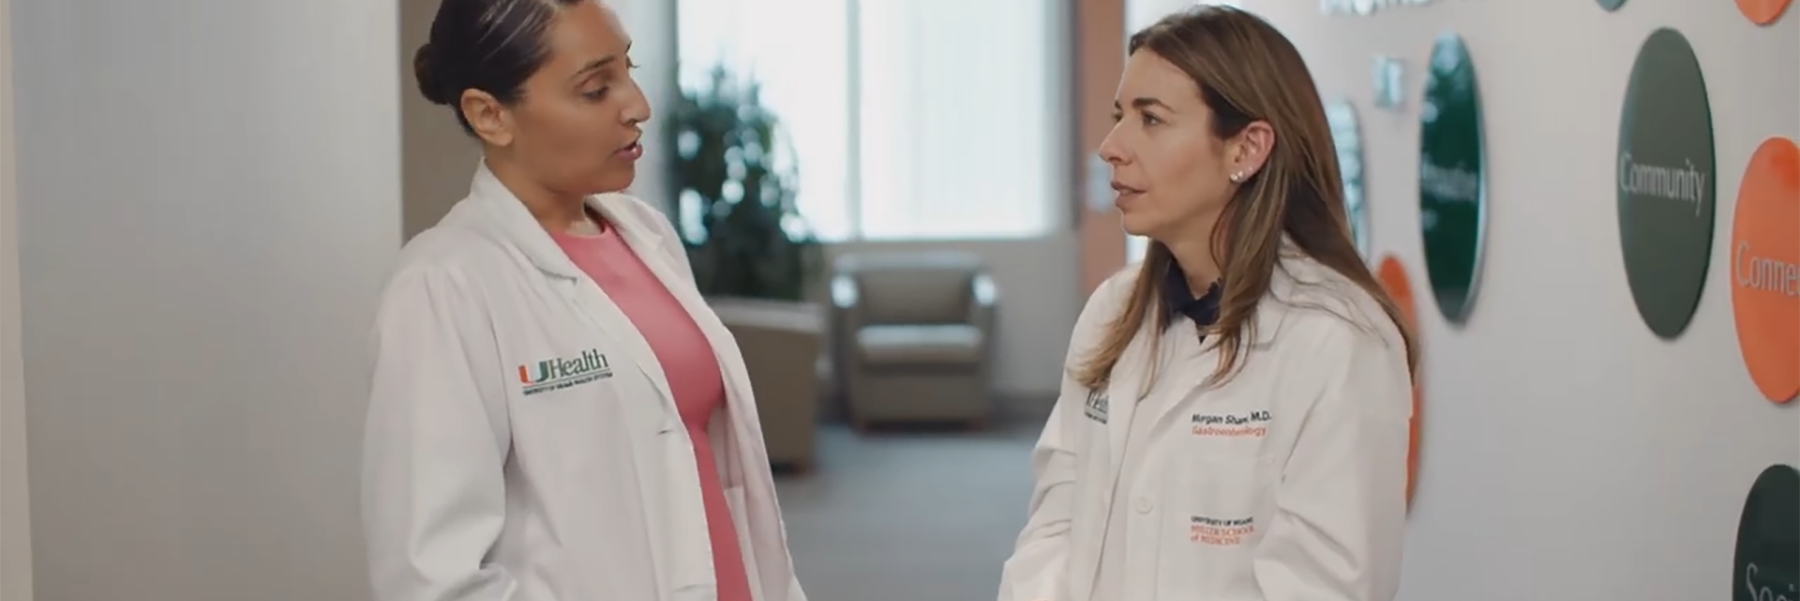 two women's health doctors speak at the UHealth women's wellness program